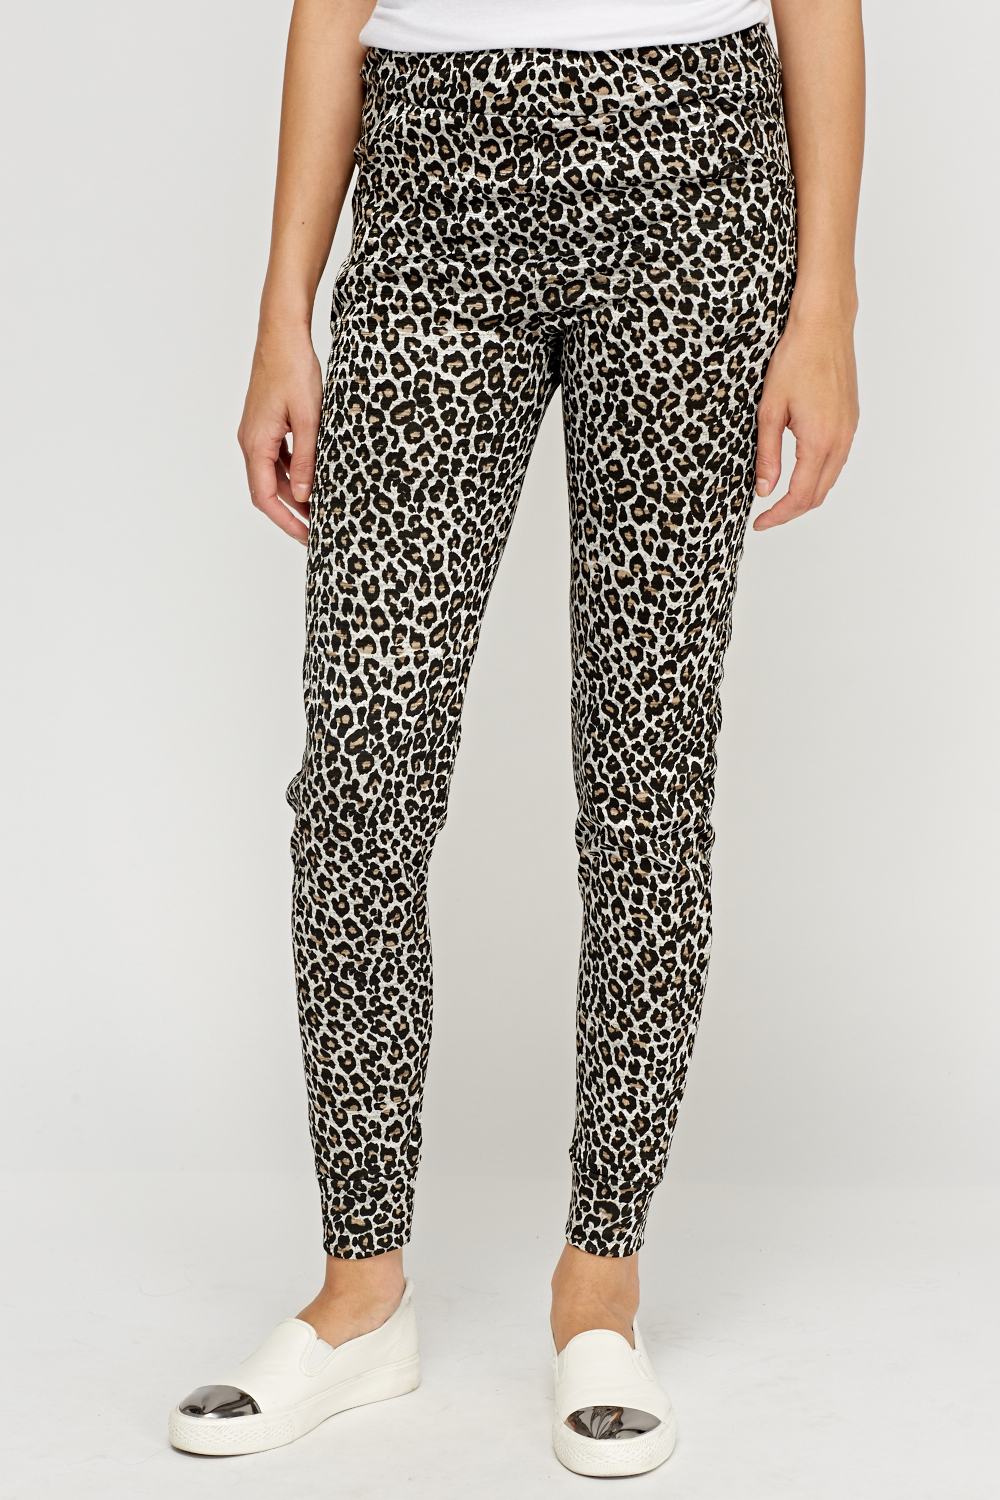 Leopard Print Joggers - Just $7